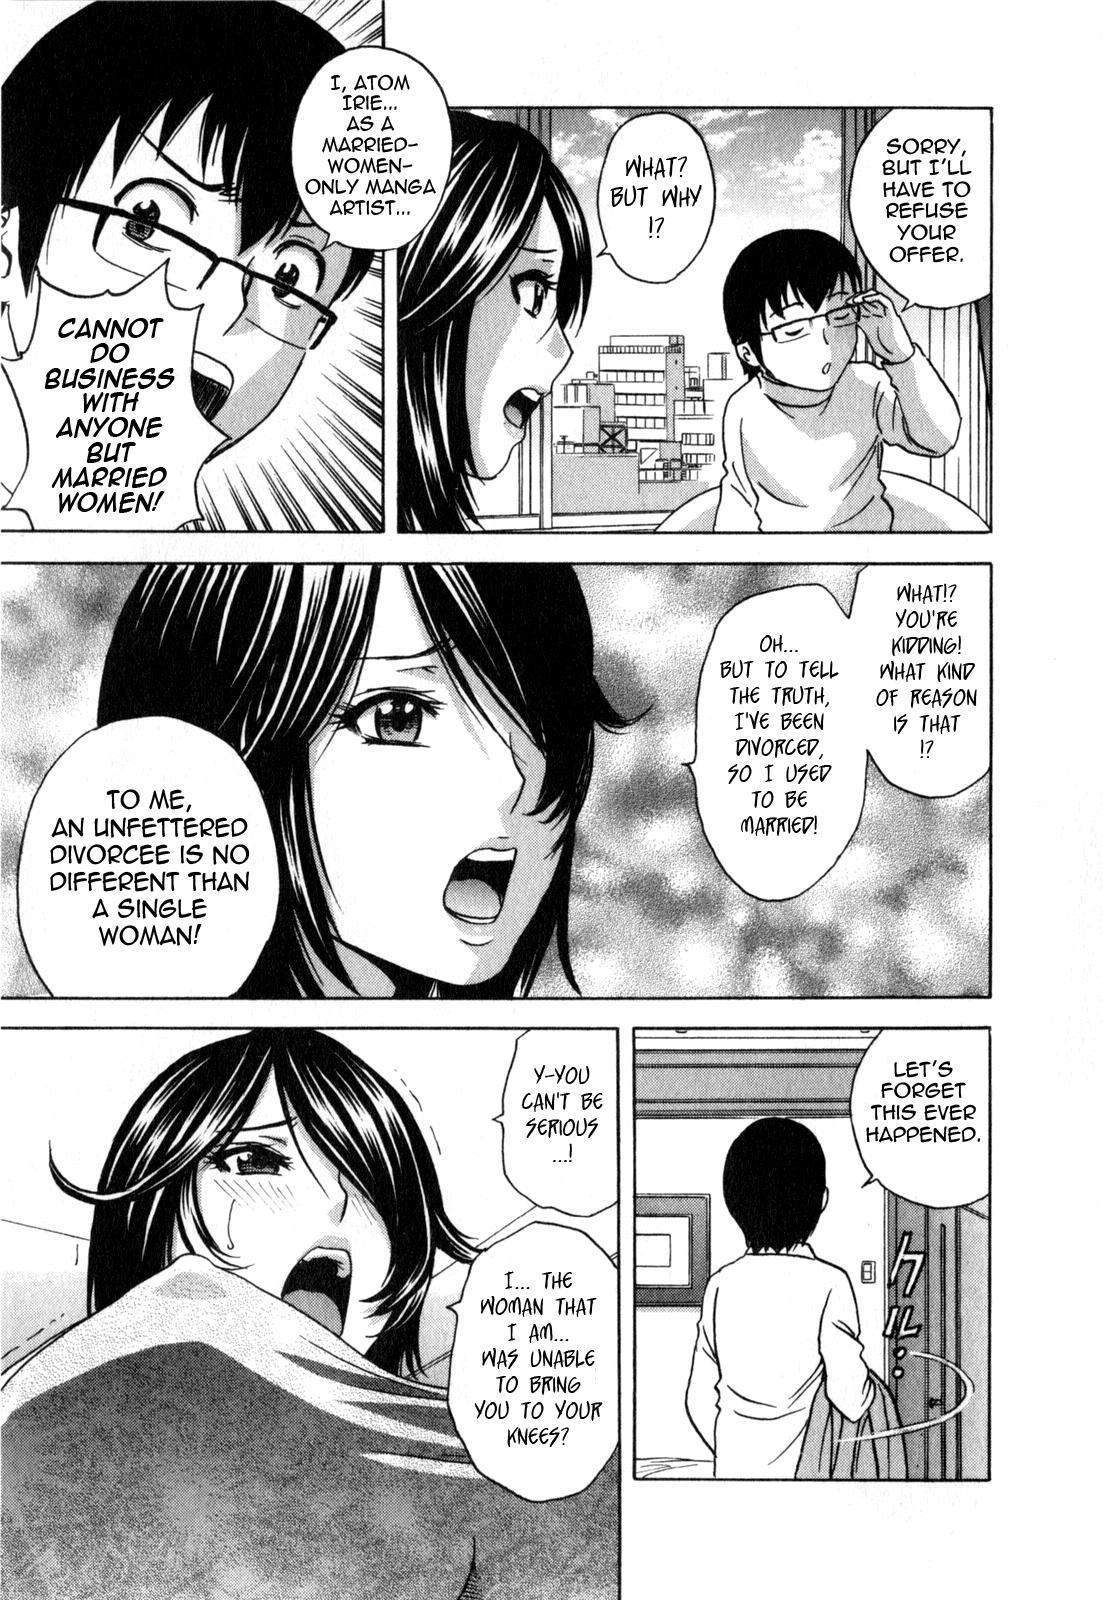 [Hidemaru] Life with Married Women Just Like a Manga 3 - Ch. 1-8 [English] {Tadanohito} 52